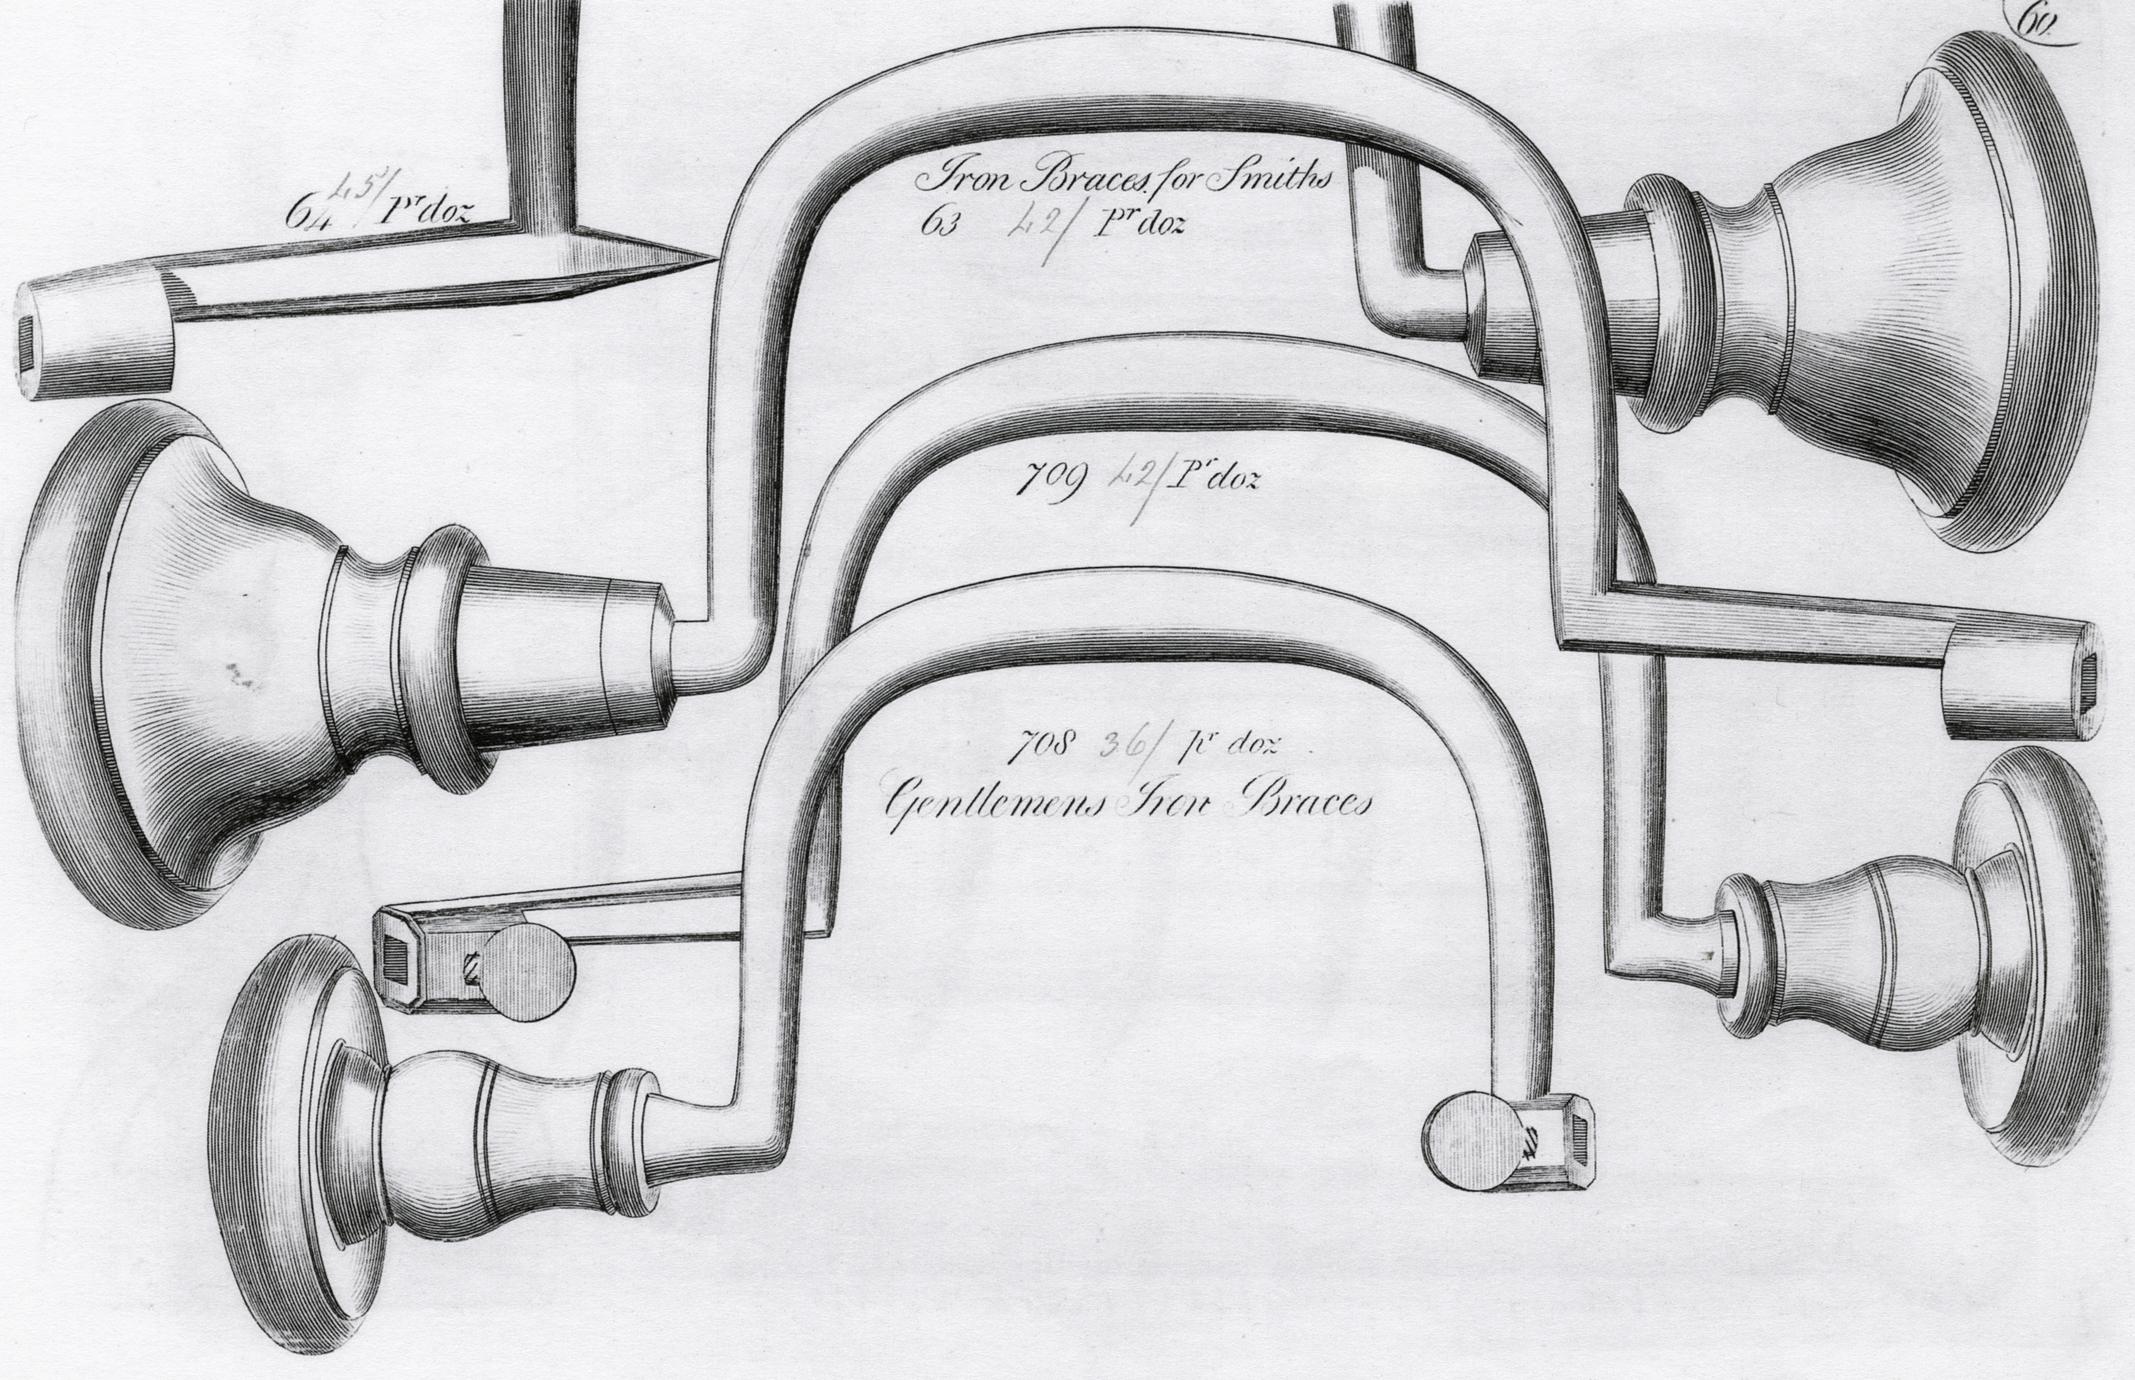 Illustration showing four gentlemens iron braces.